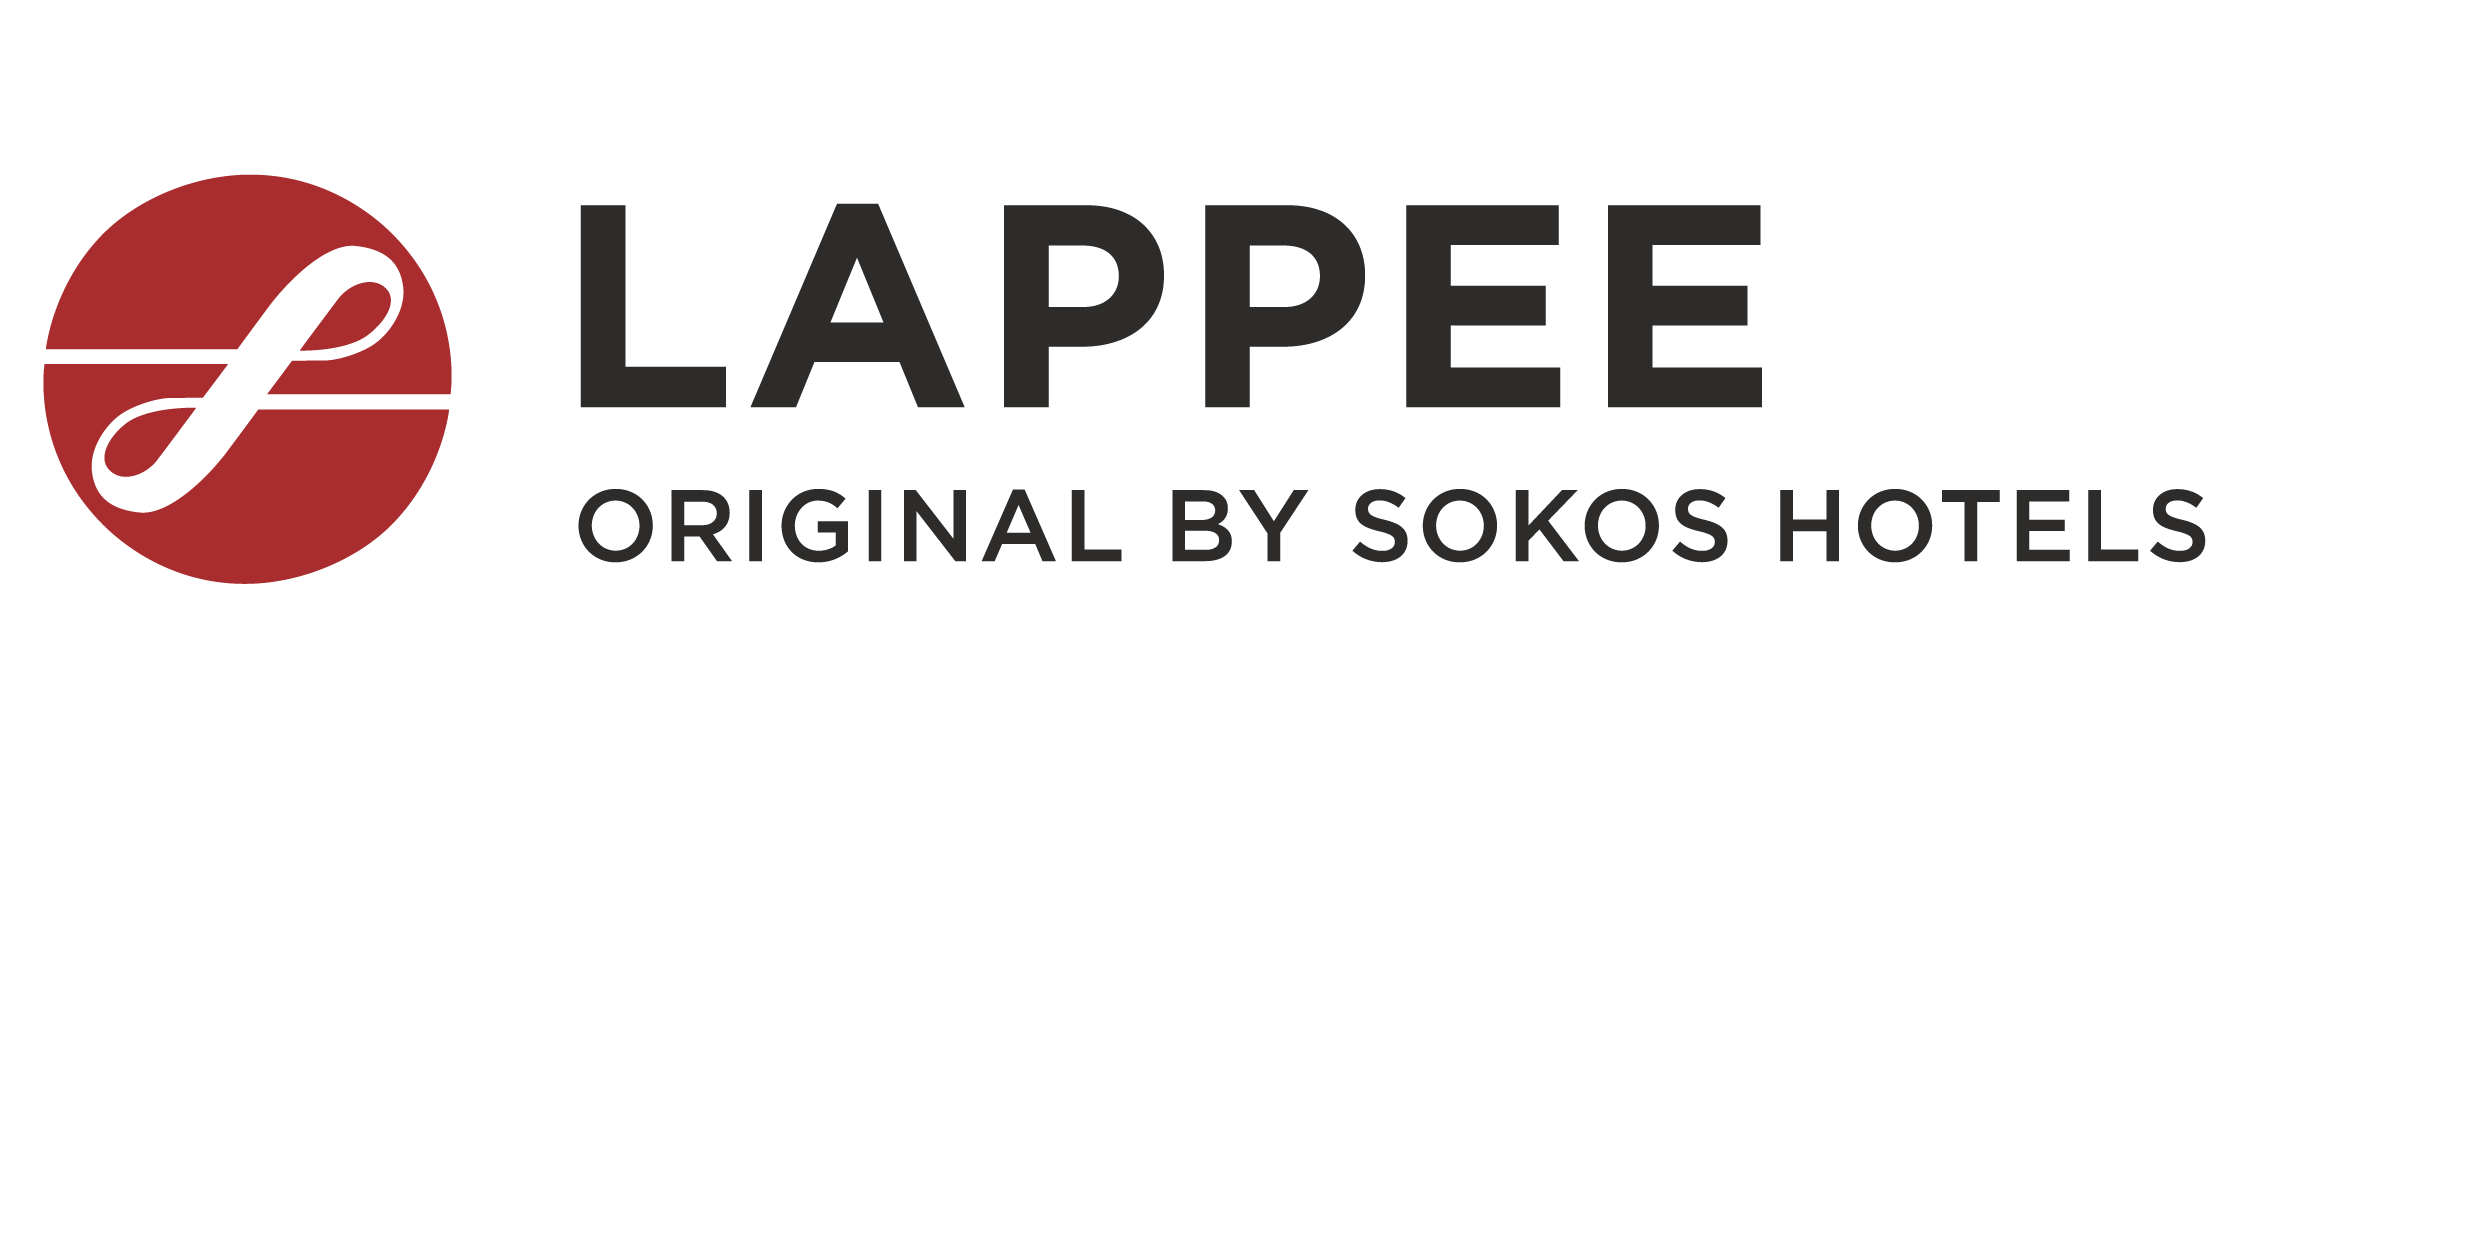 Original Sokos Hotel Lappee